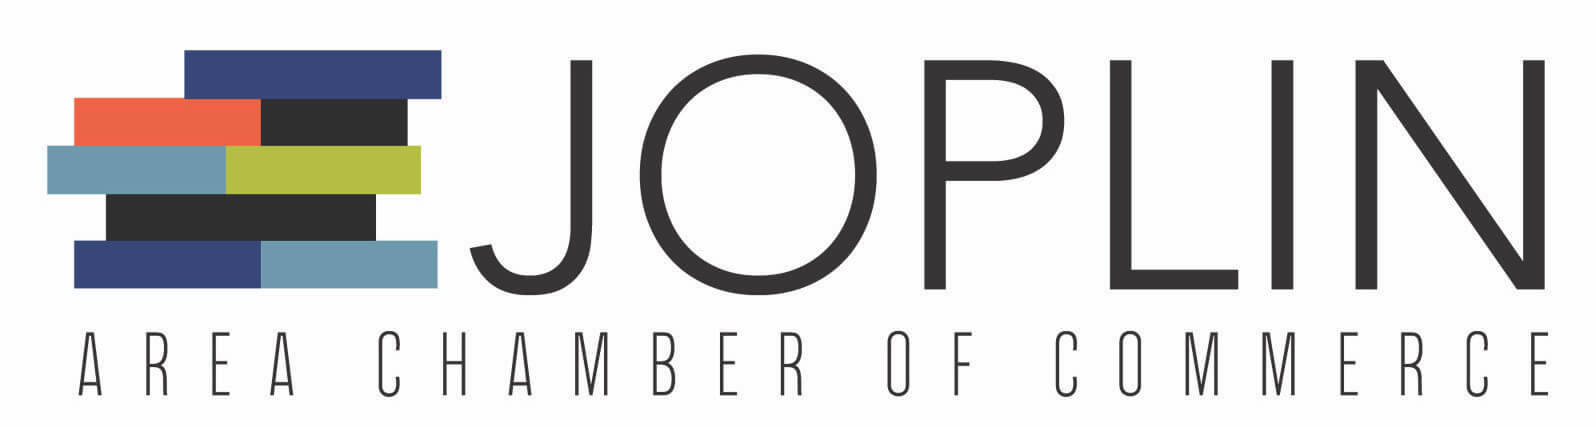 joplin-area-chamber-of-commerce-7